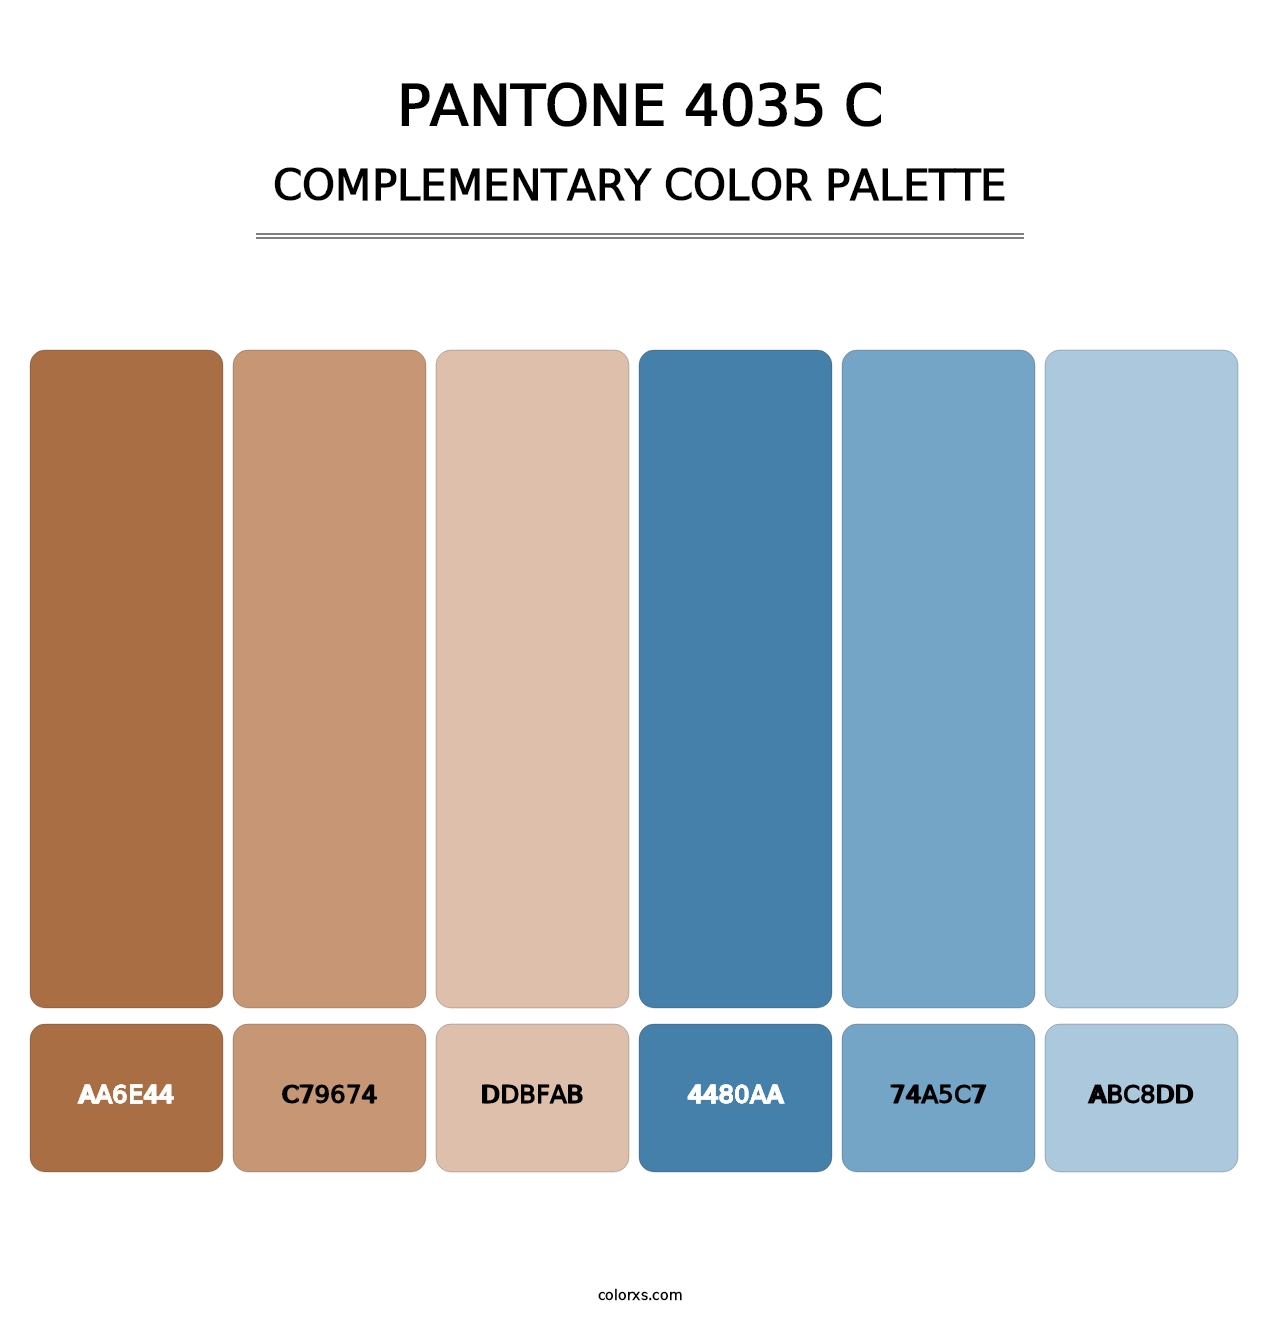 PANTONE 4035 C - Complementary Color Palette